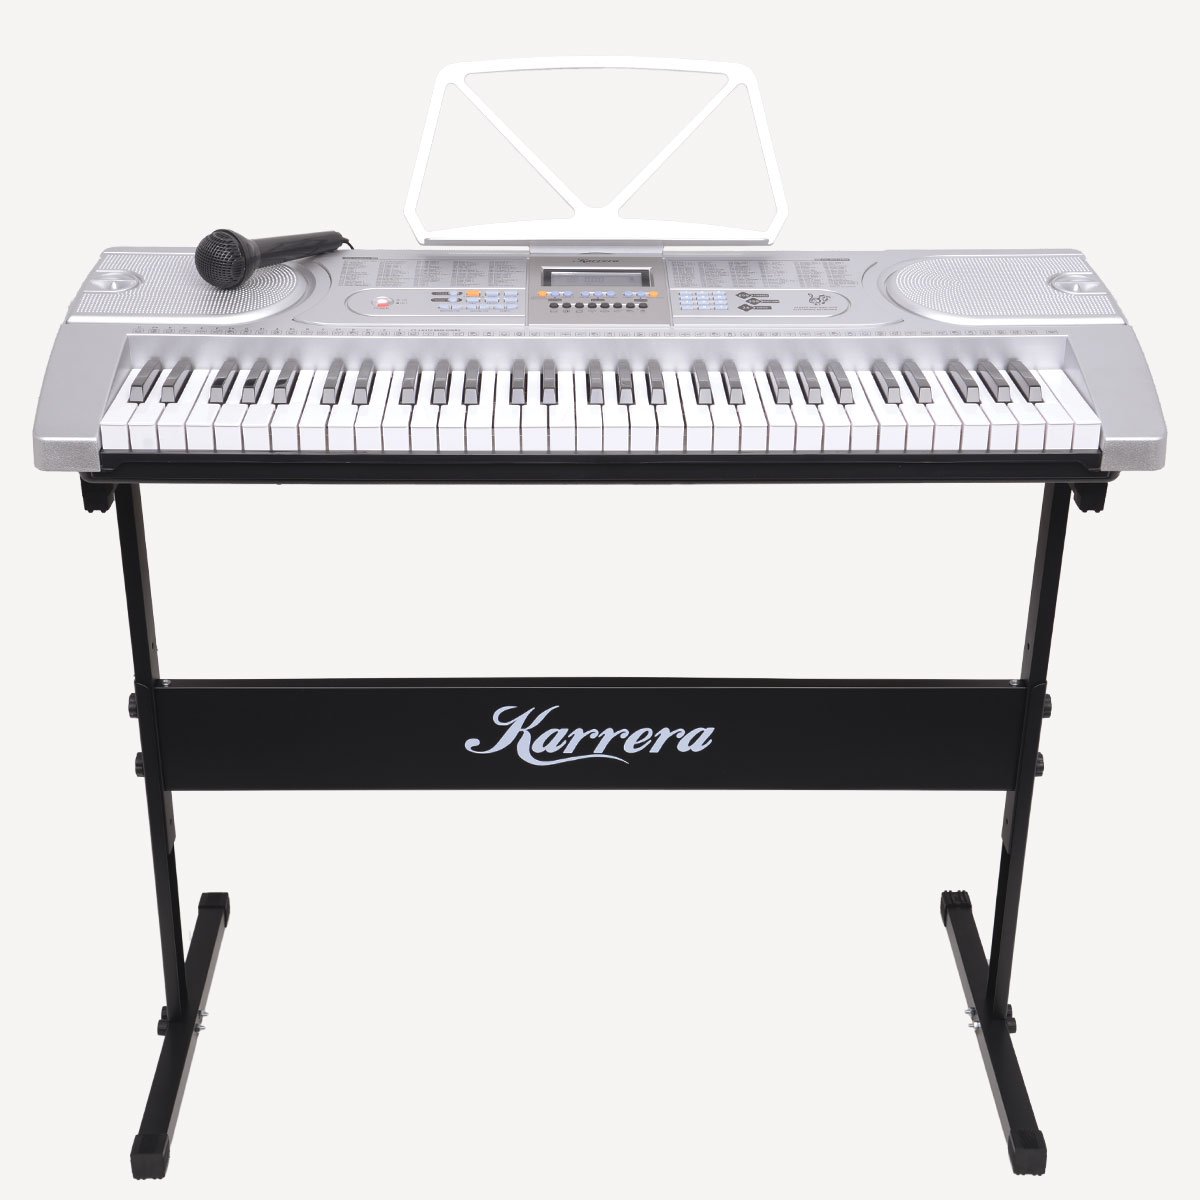 Karrera 61 Keys Electronic Keyboard Piano with Stand - Silver 1